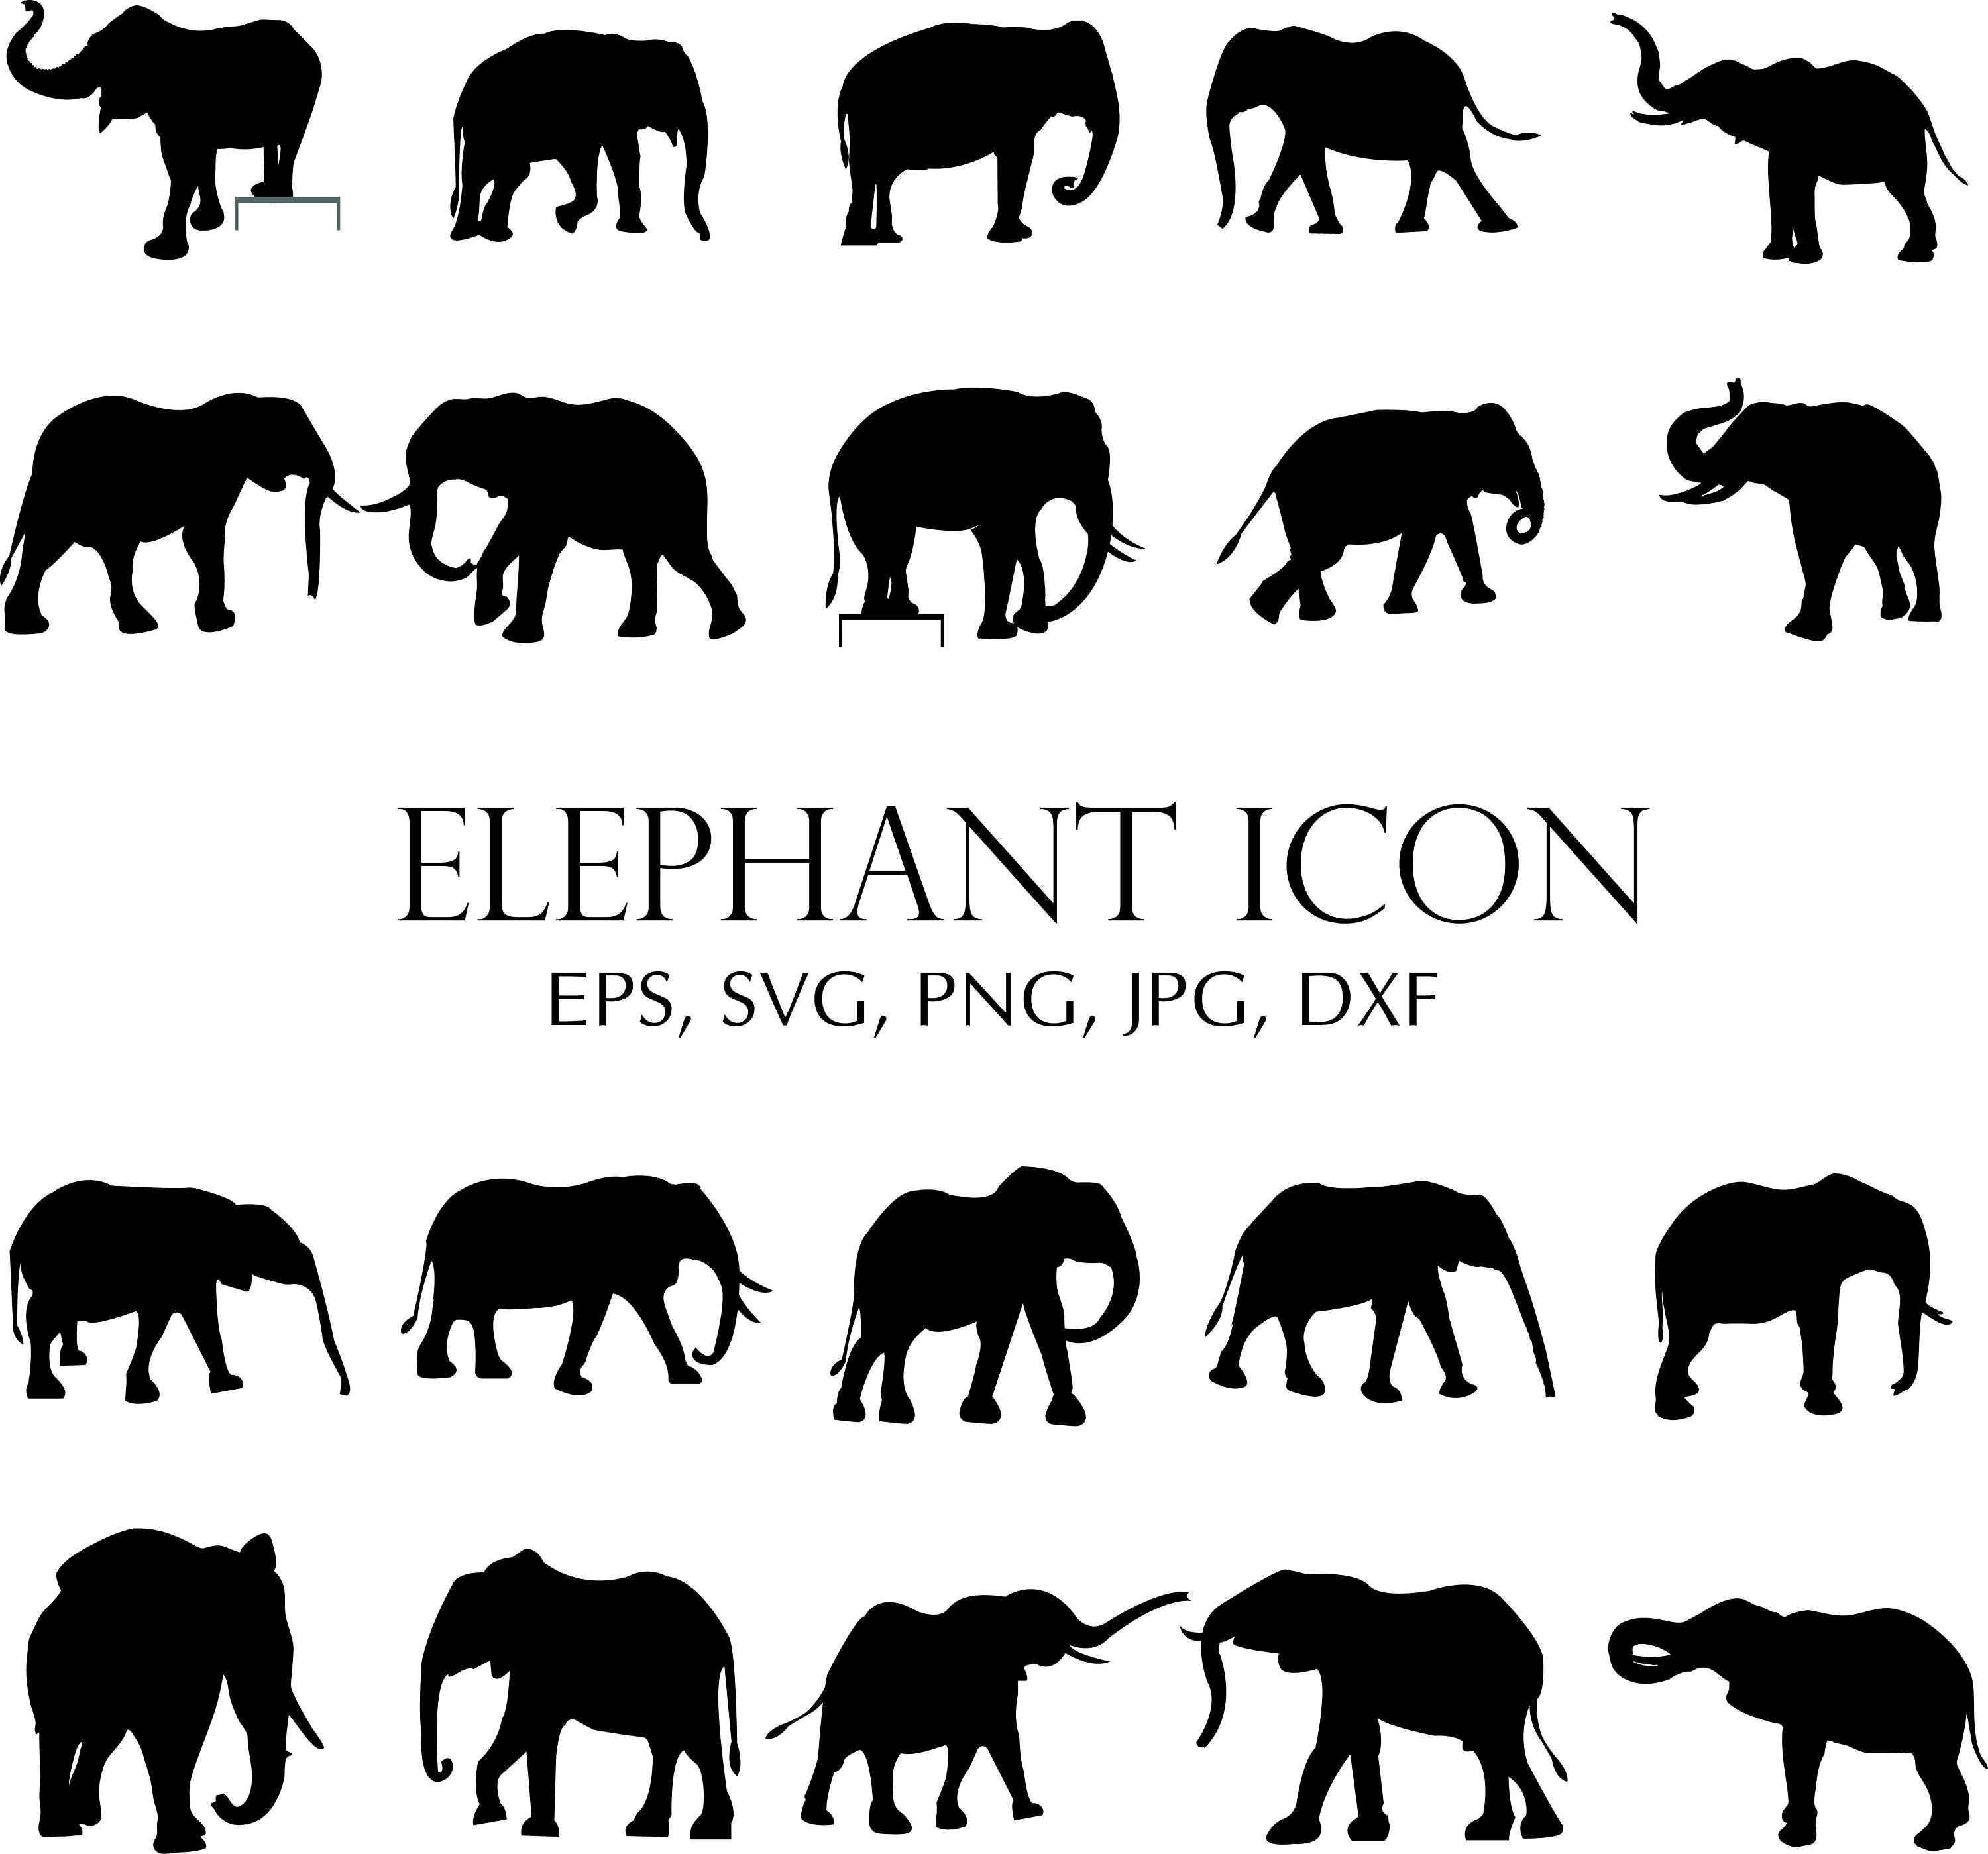 Download 20 Elephant SVG Elephant Silhouettes svg elephant clipart